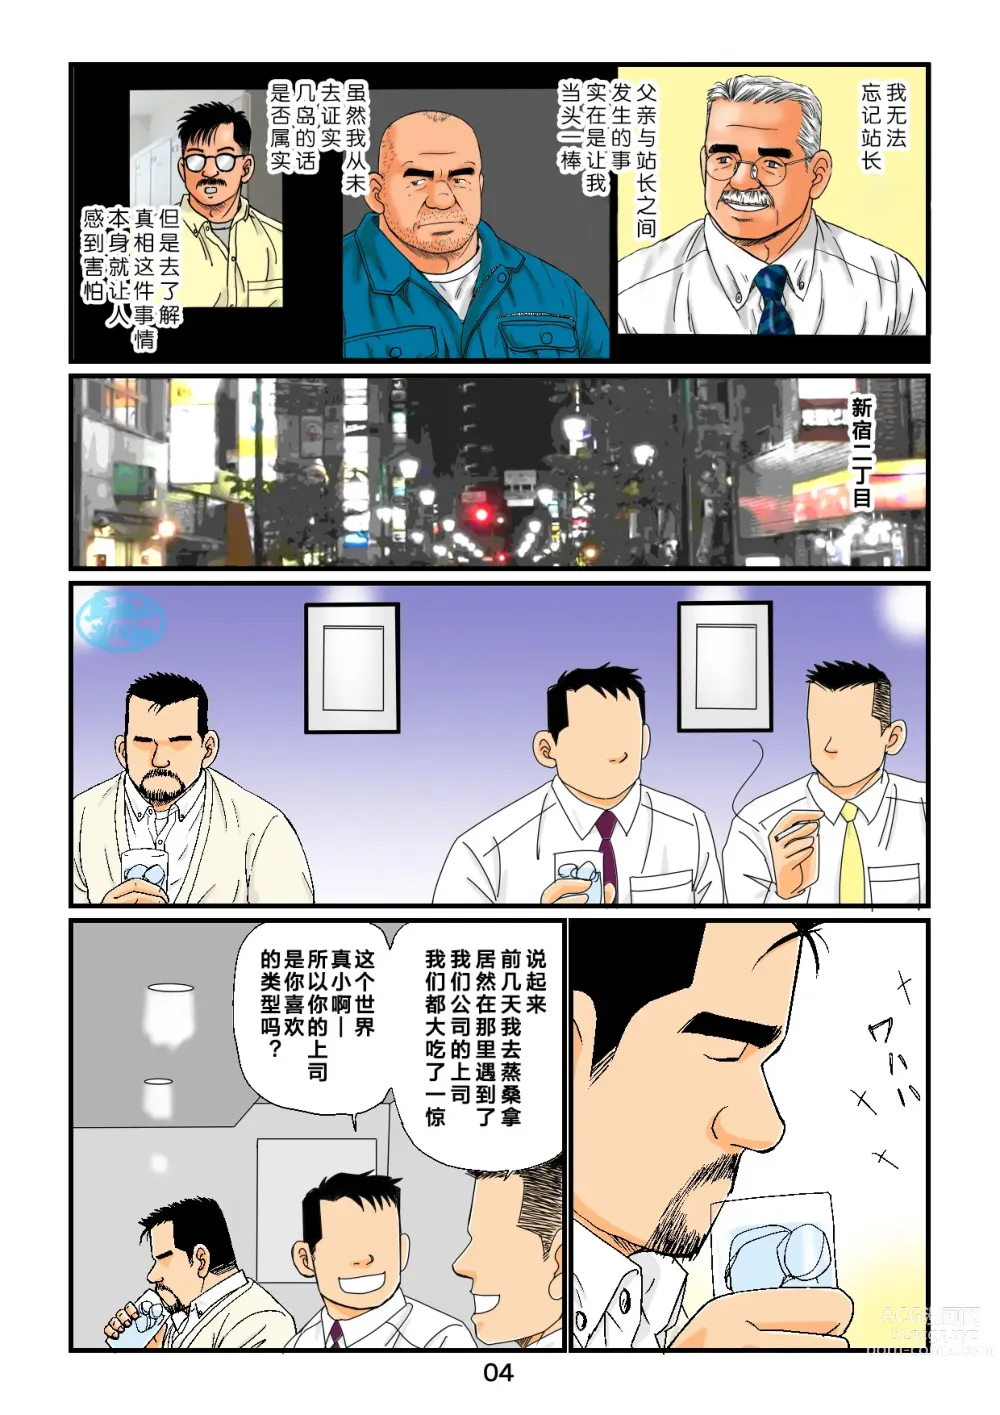 Page 4 of manga 「铁道员的浪漫」 第三回 站长与铁道员之夜